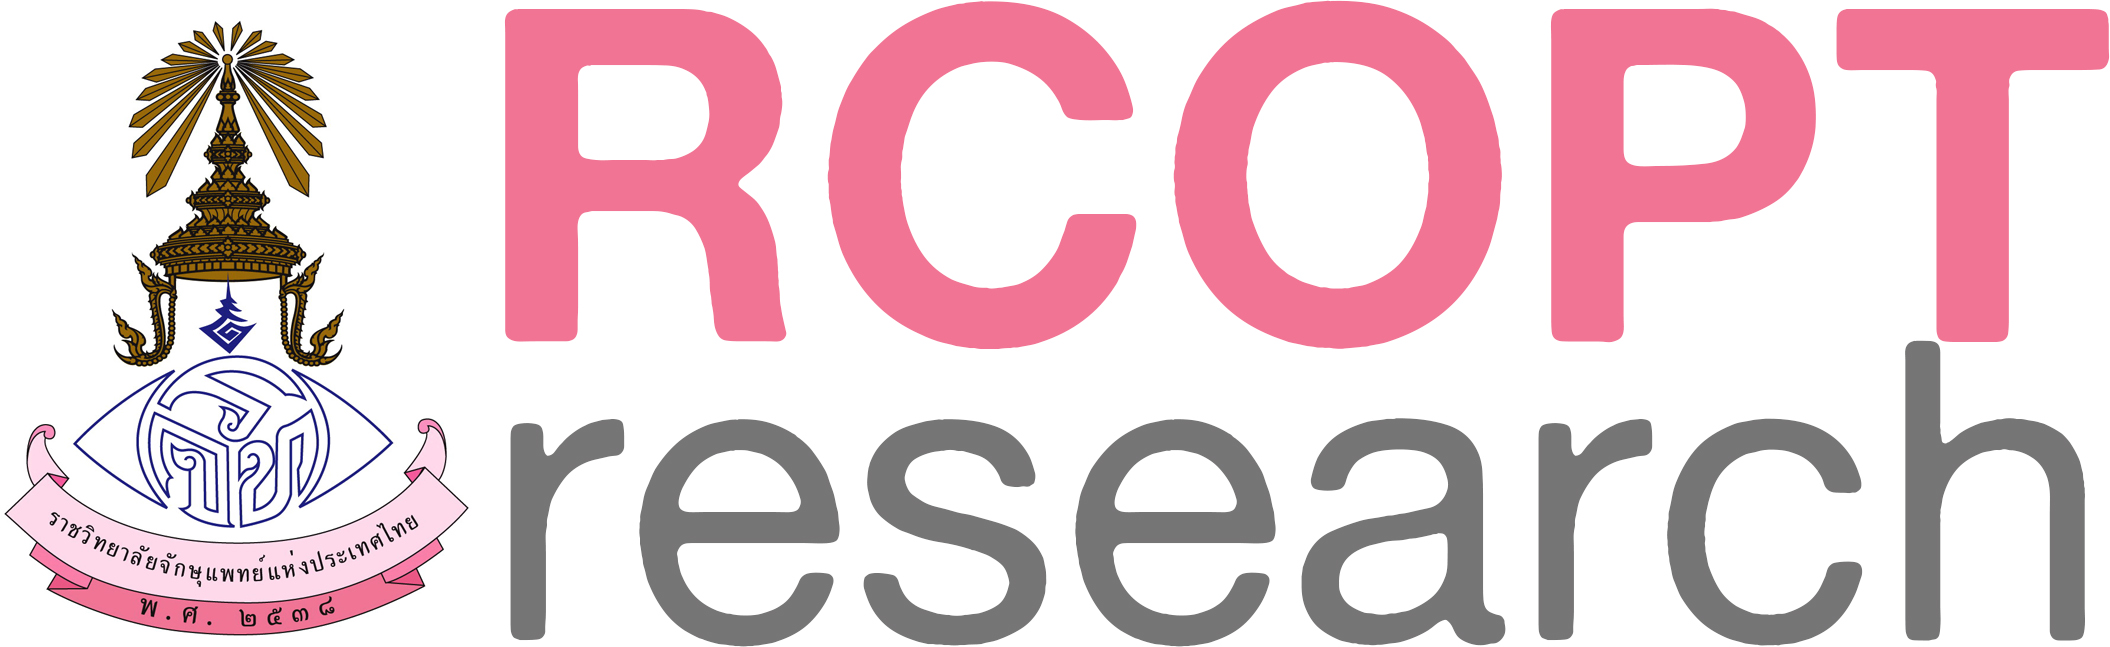 1524RCOPT research logo1.jpg